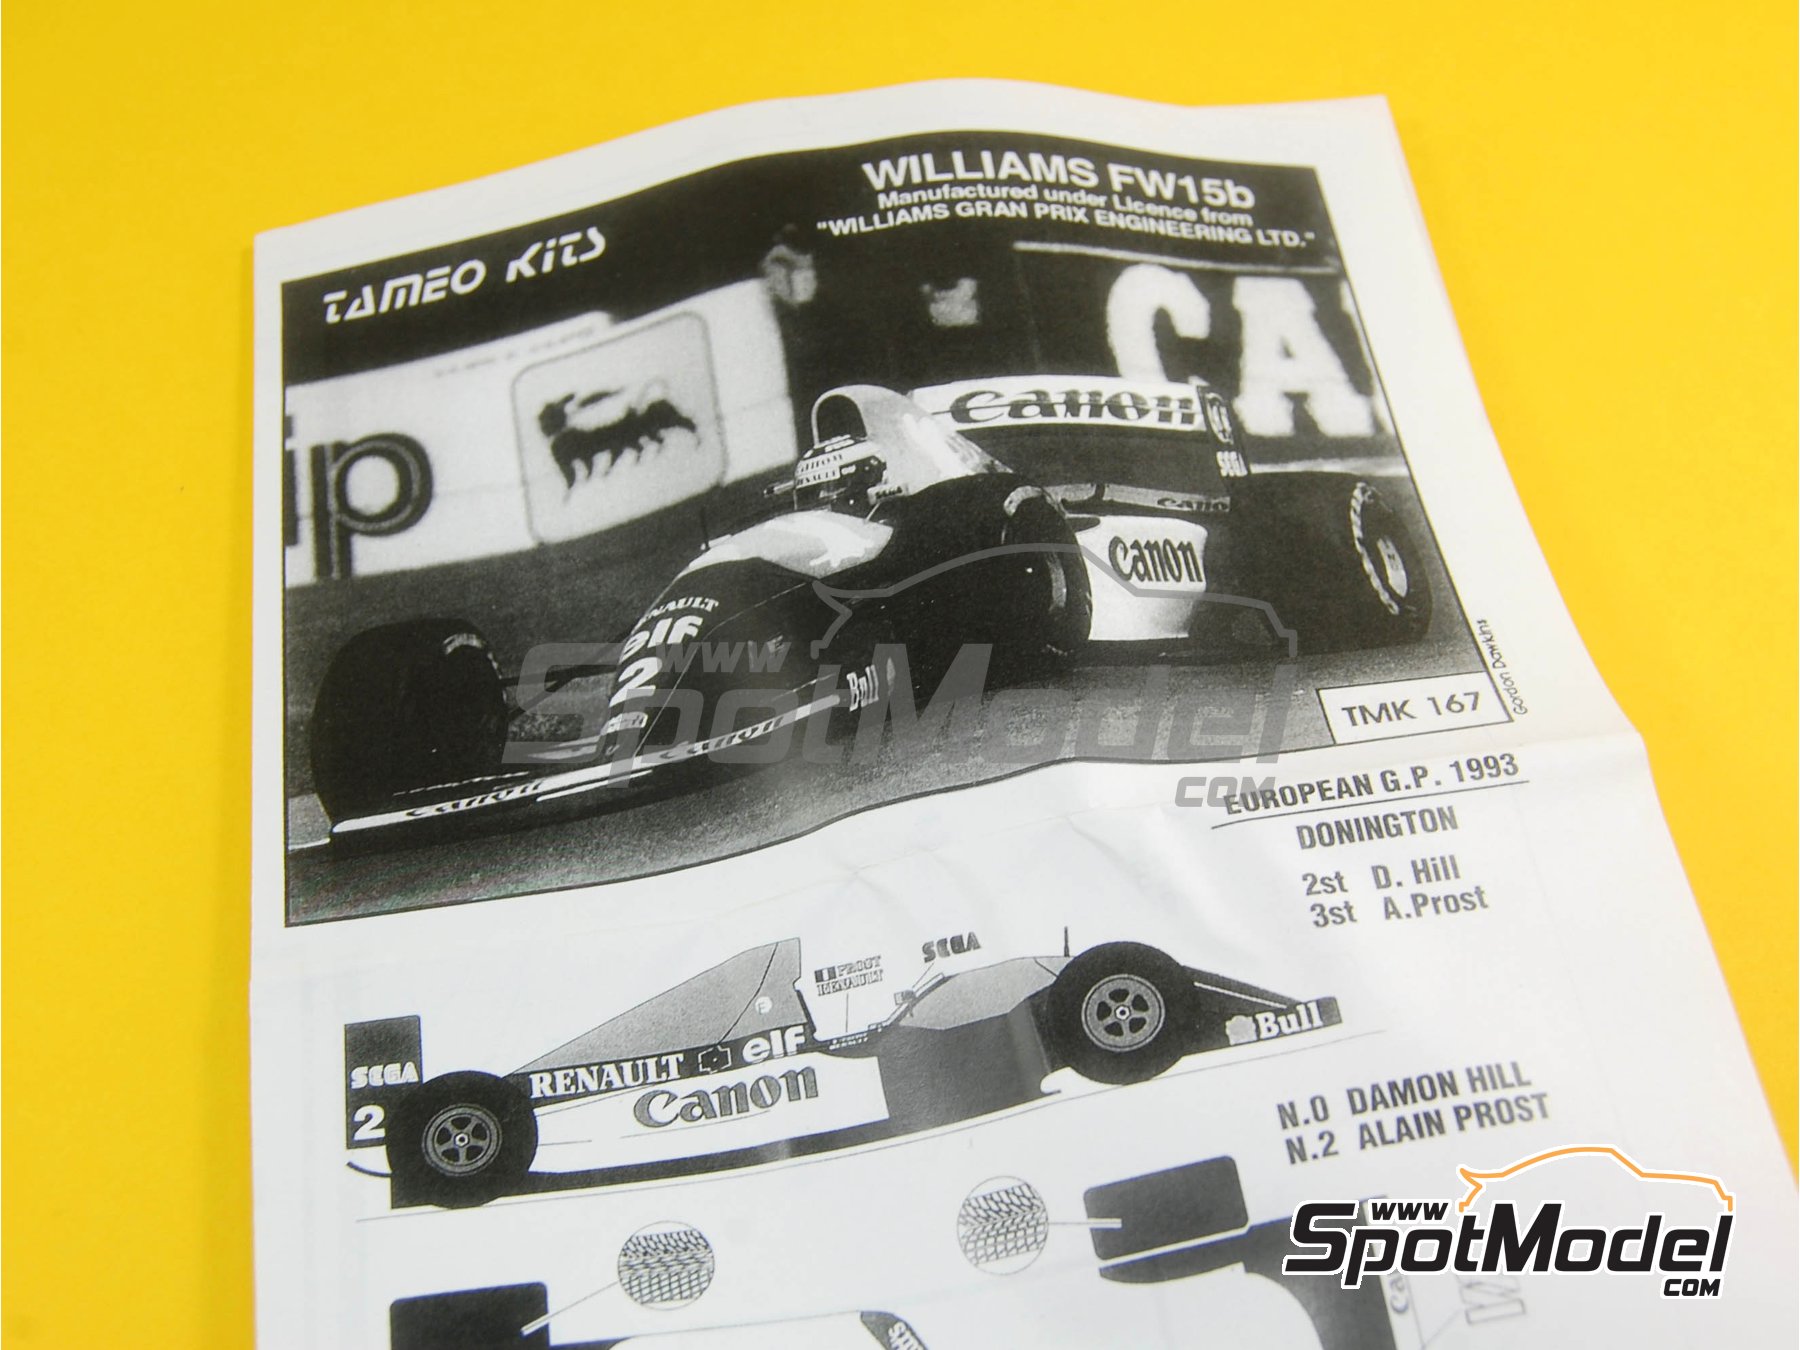 Williams Renault FW15c Williams Grand Prix Engineering Team sponsored by  Camel - European Formula 1 Grand Prix 1993. Car scale model kit in 1/43  scale